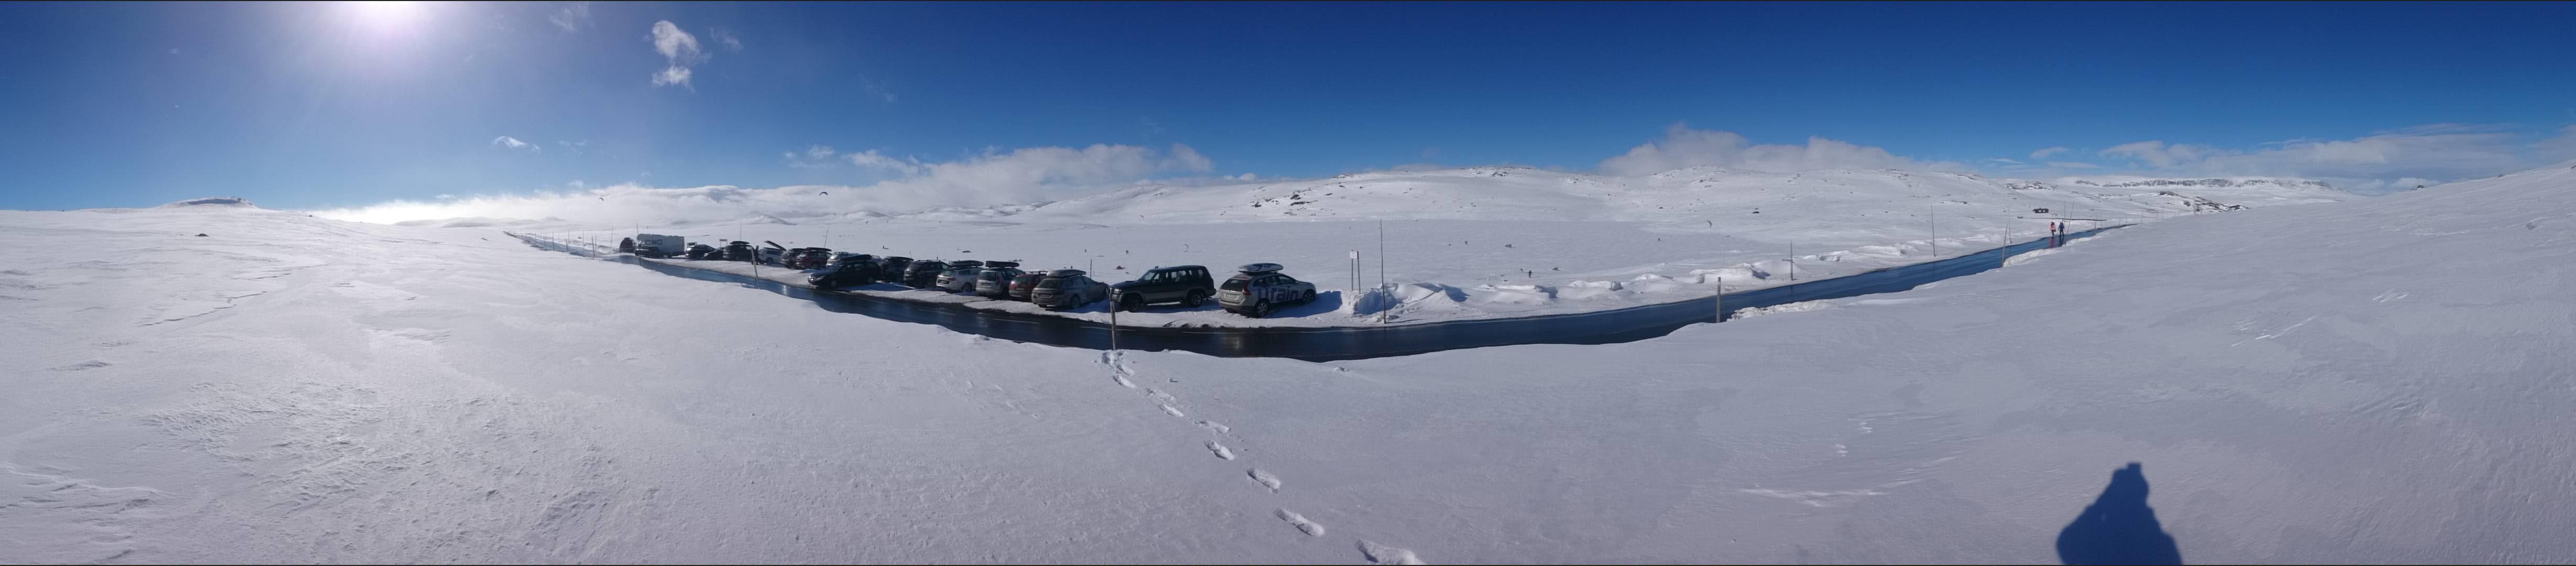 Snowkiting-Norsko-Hardangervidda-panorama.JPG